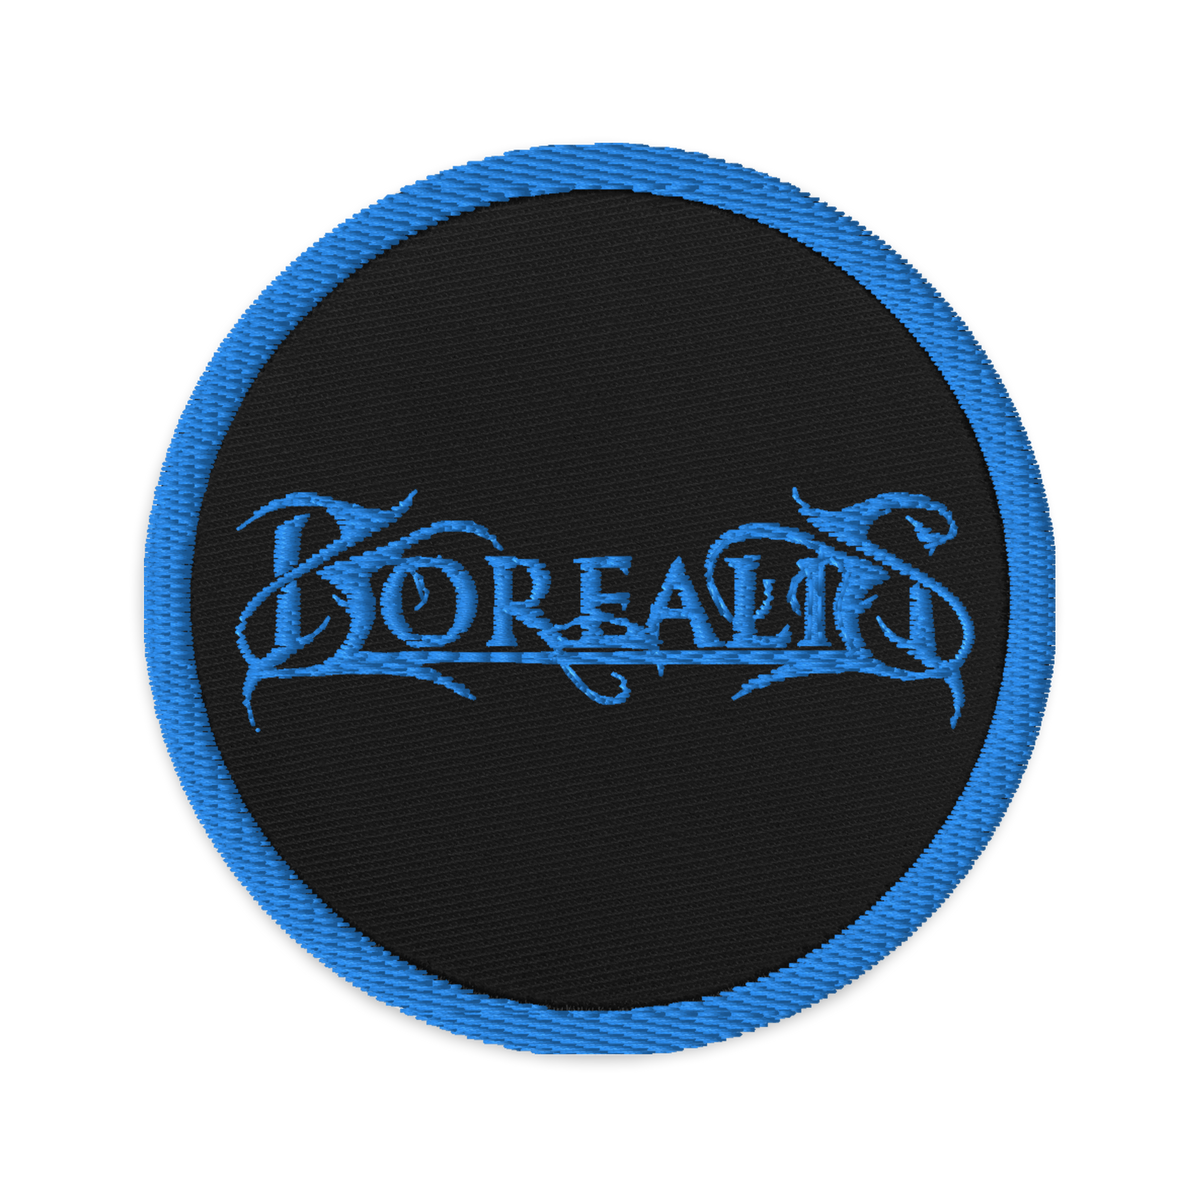 Borealis Embroidered Patch - Aqua Blue